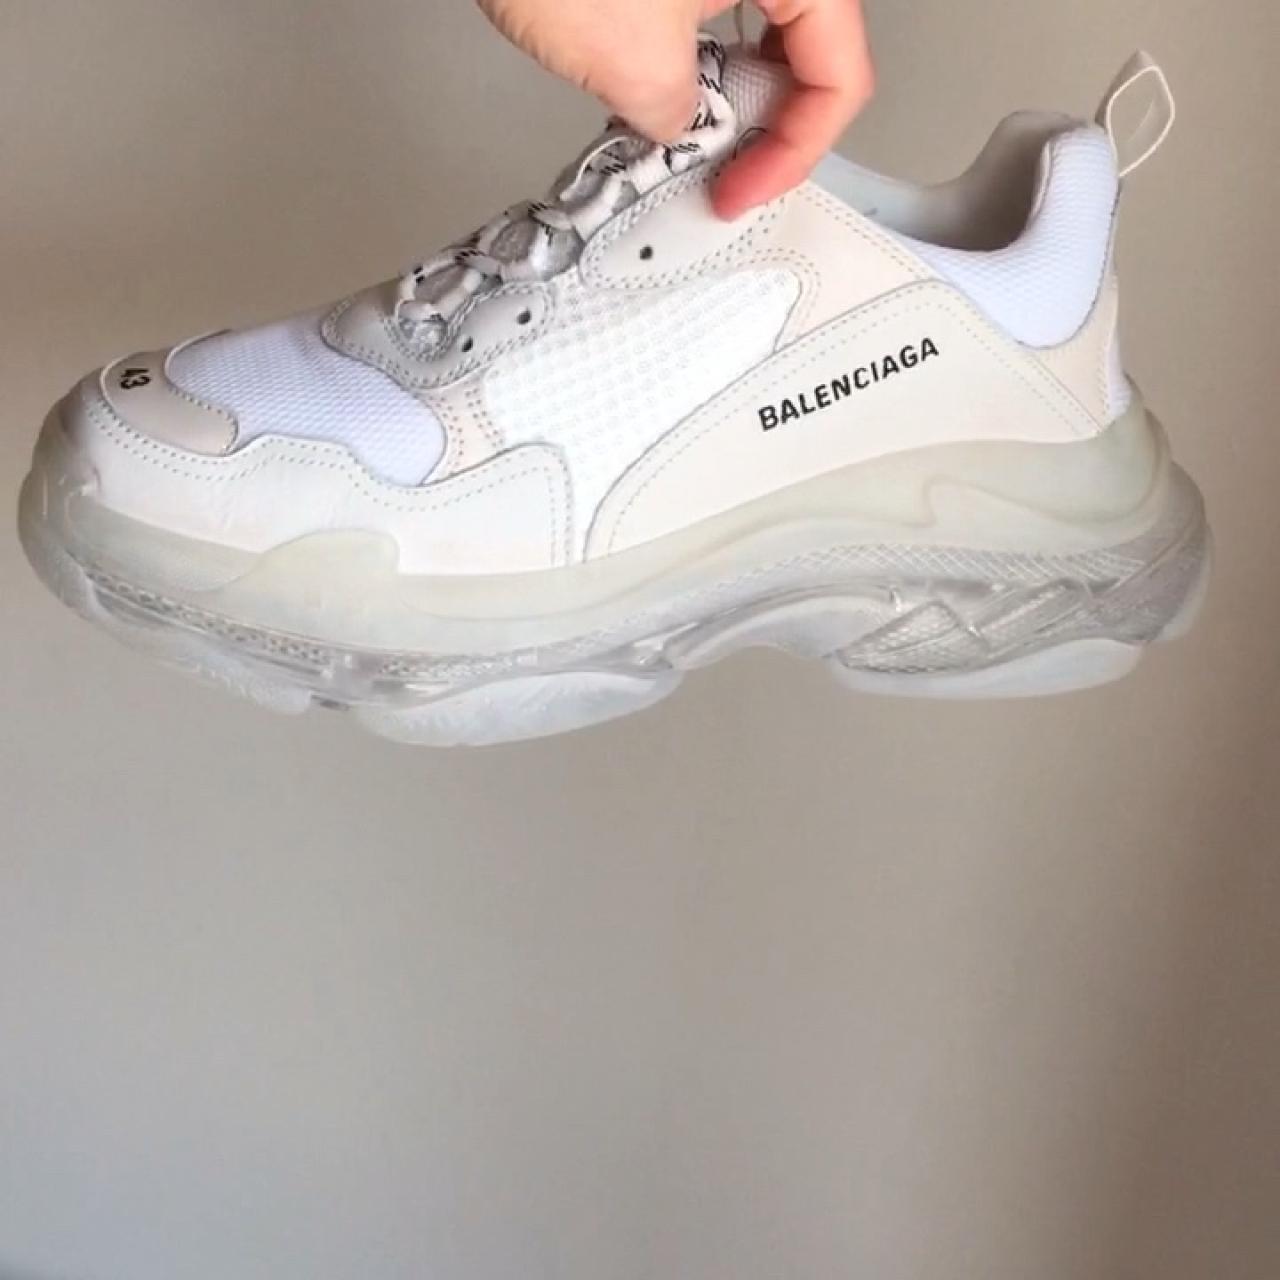 Triple S sneakers shoes in 2019 Sneakers Balenciaga